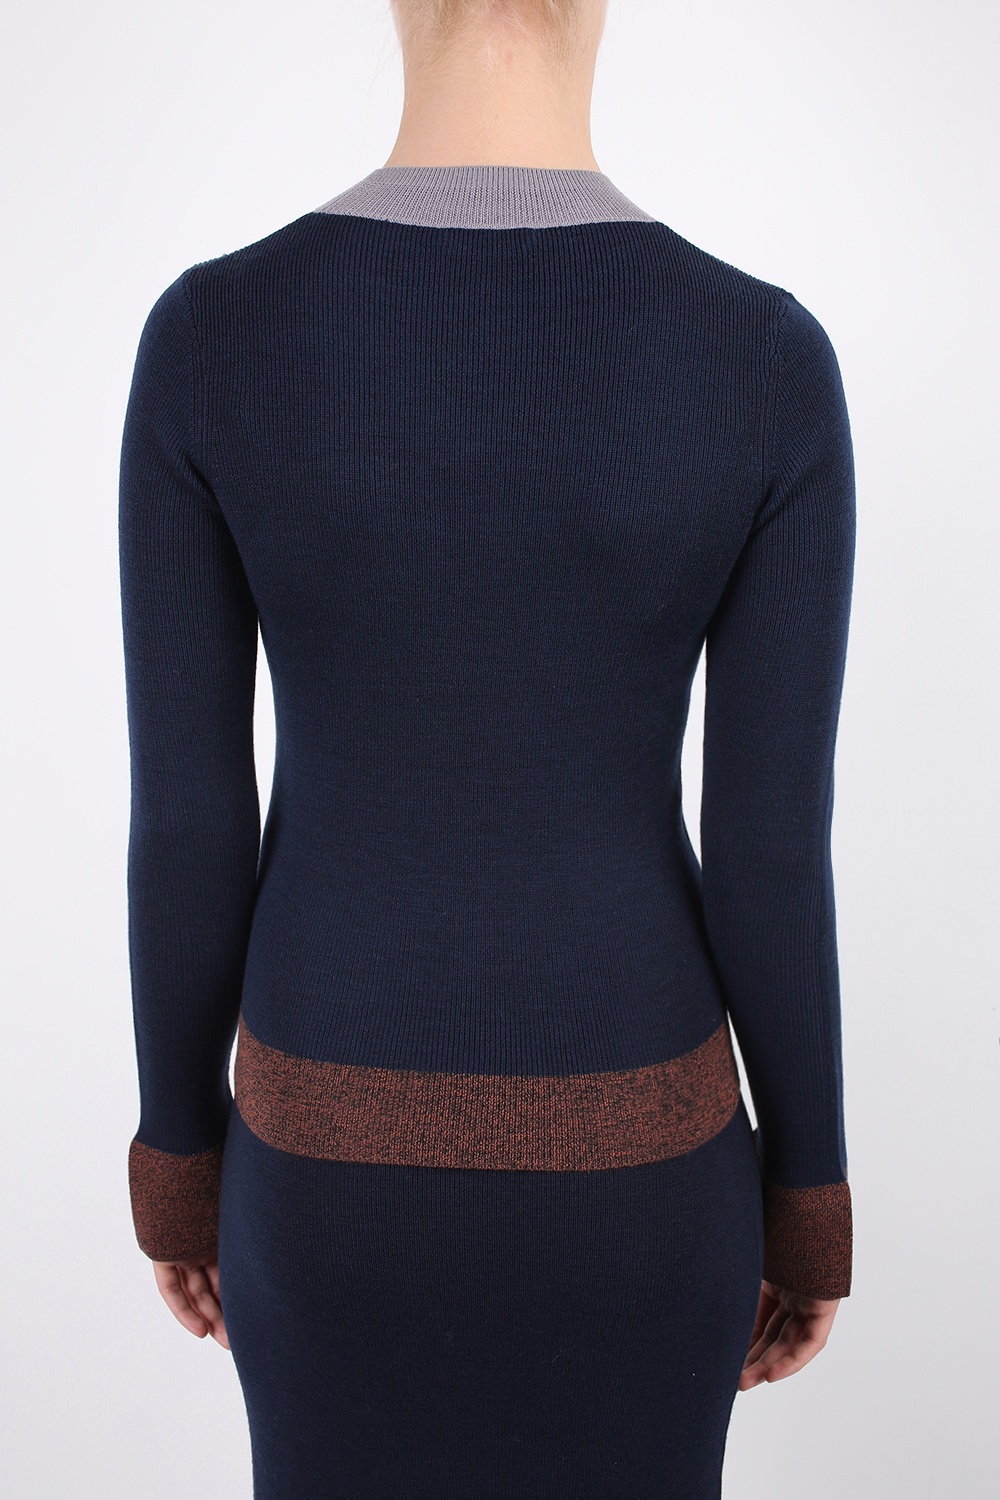 Chloé Turtleneck Sweater